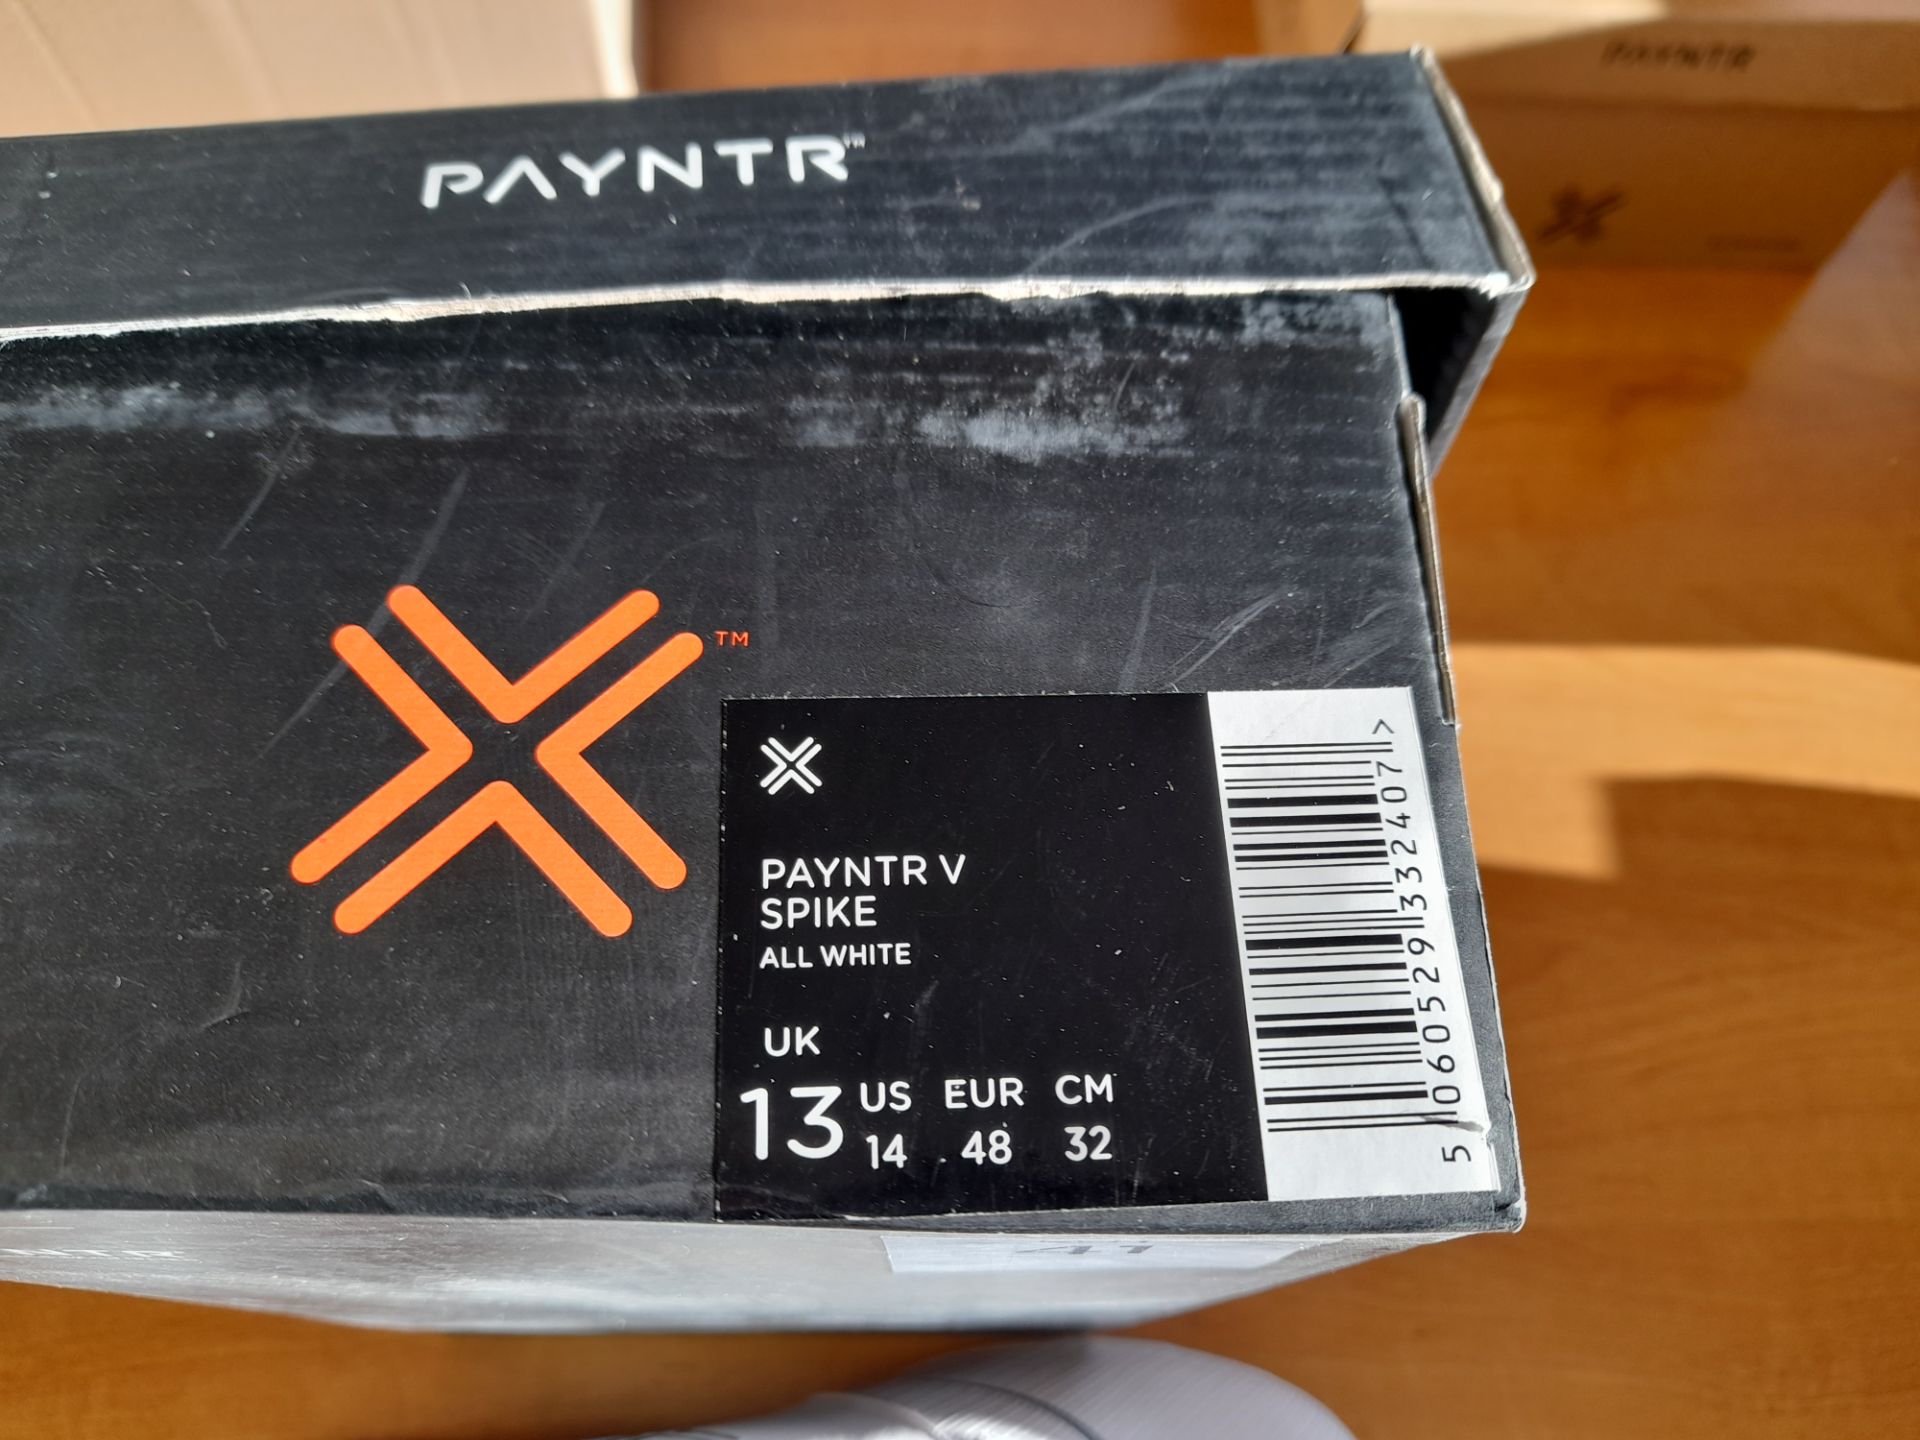 Payntr V Pimple All White Cricket Shoe Size 13 UK - Image 2 of 4